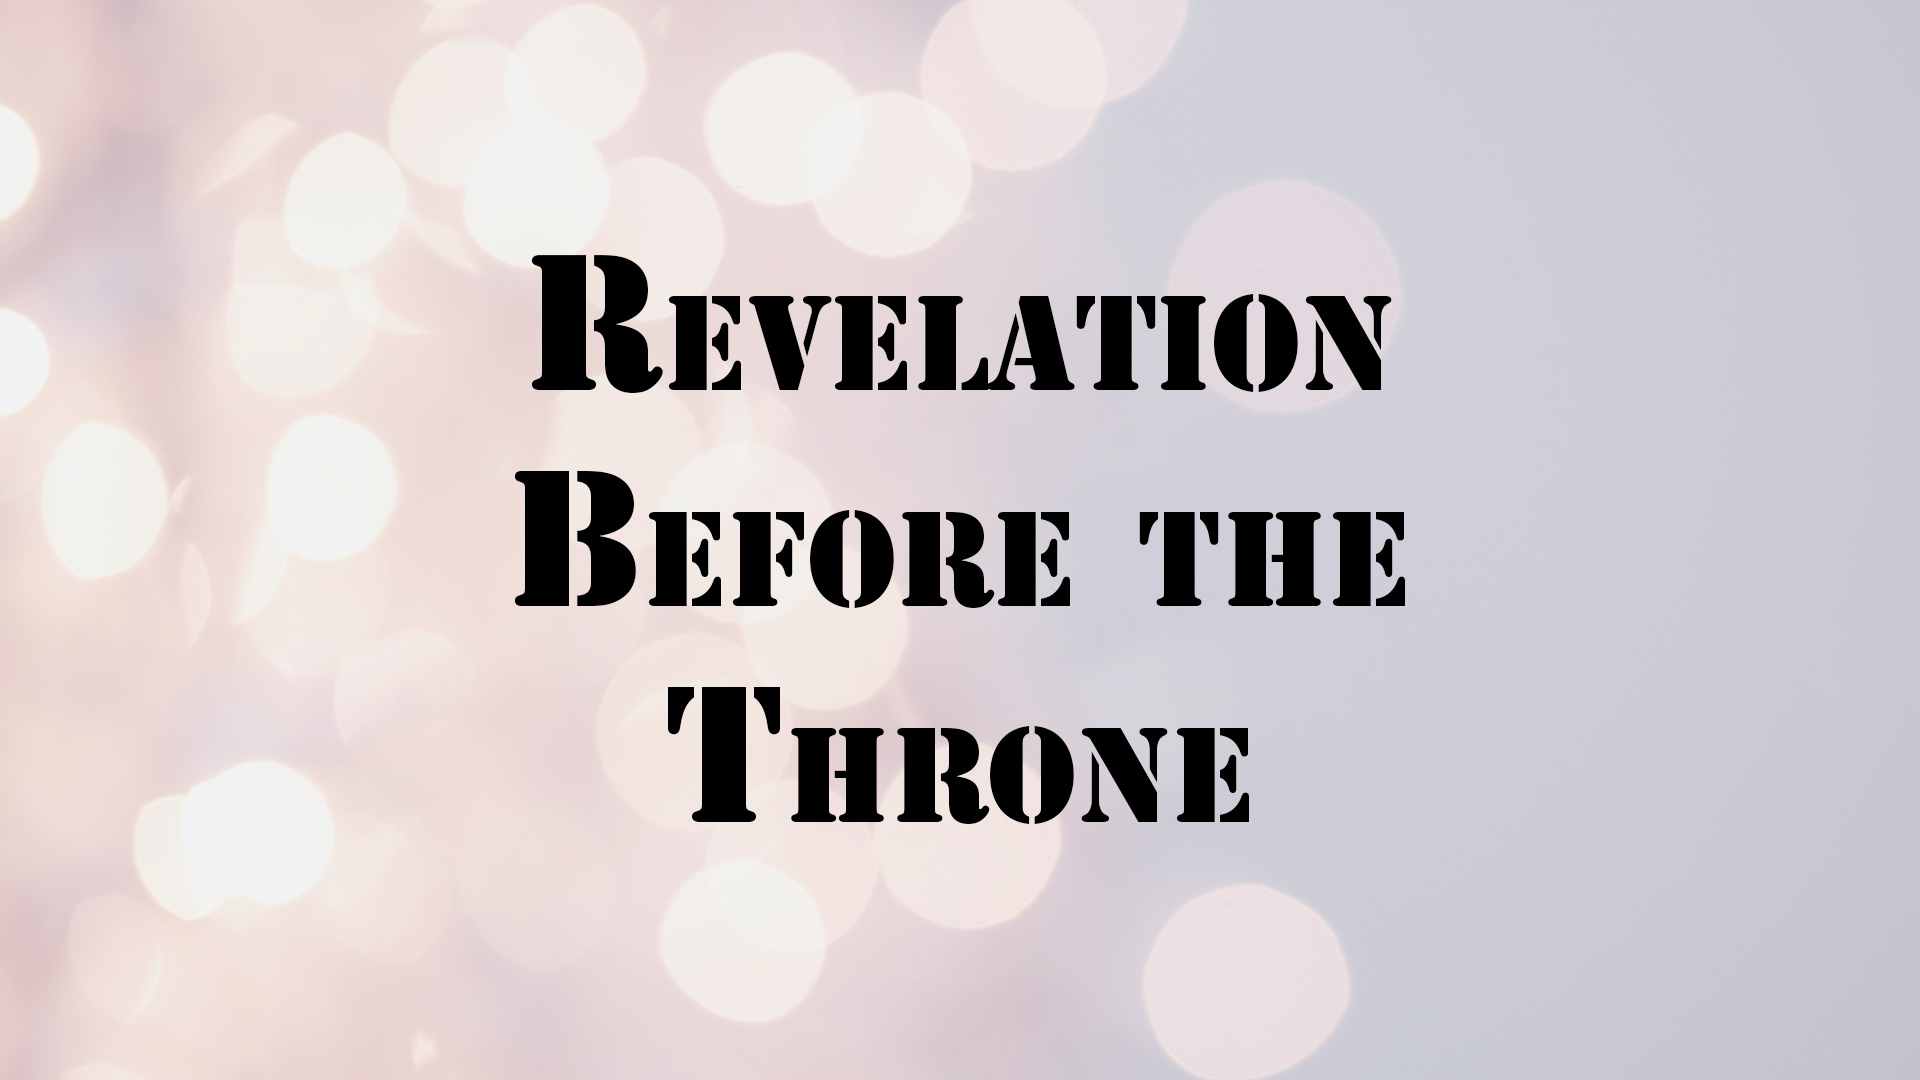 Revelation before the throne